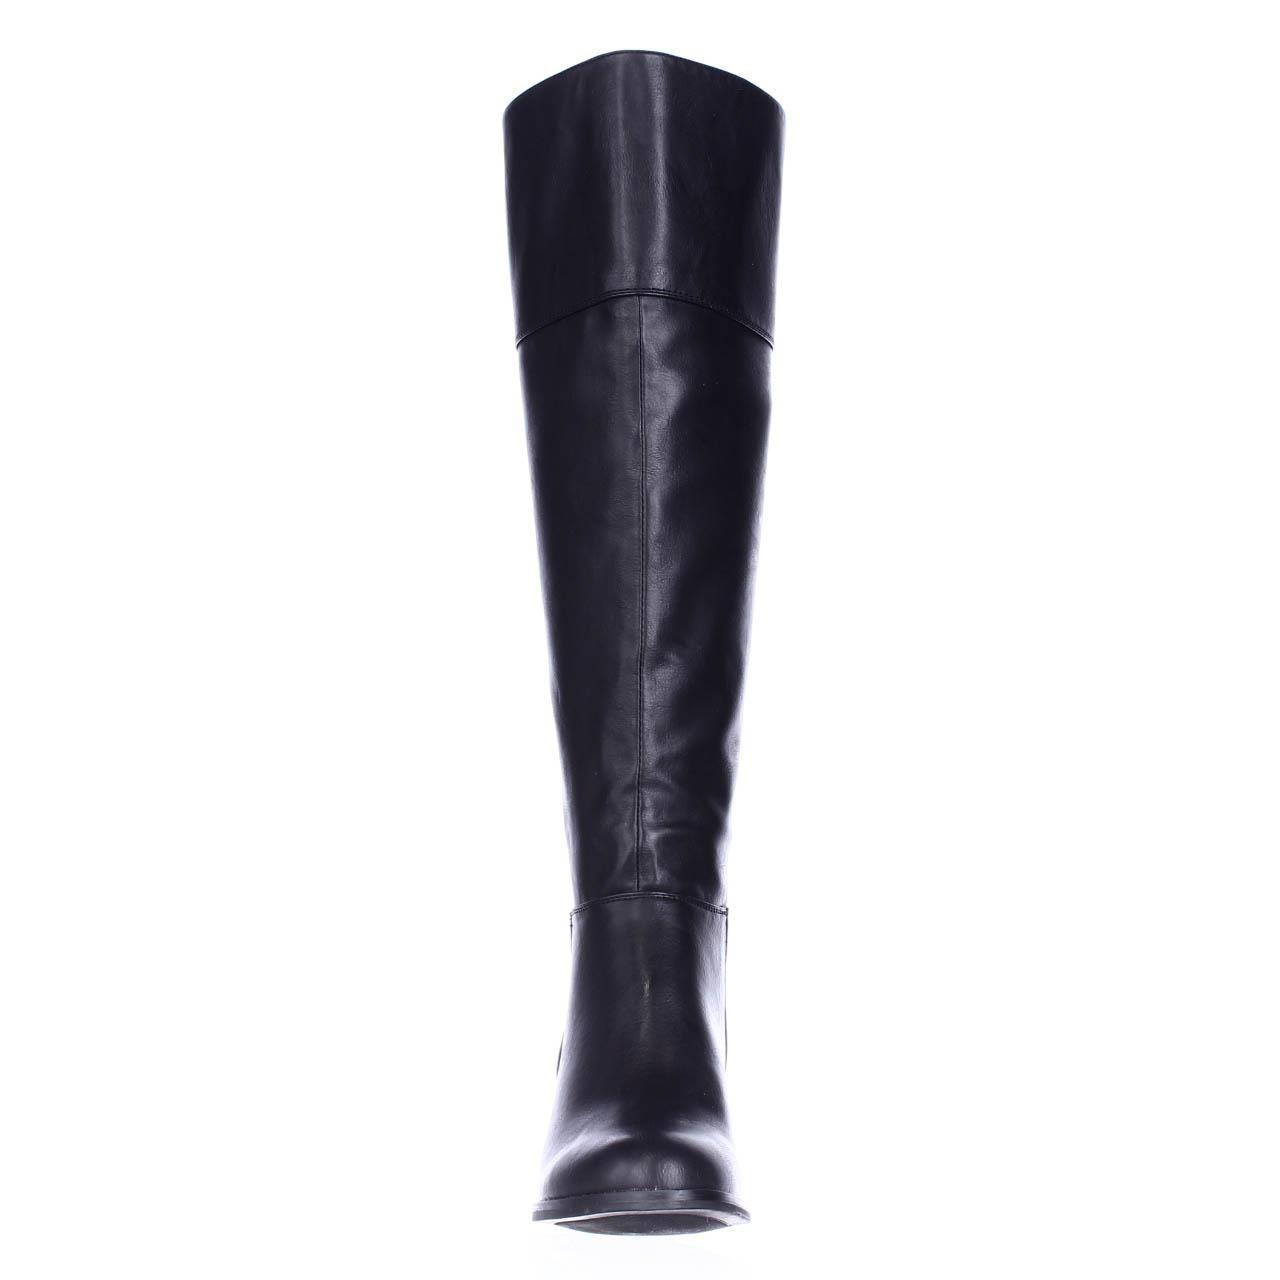 Lyst - Madden girl Wendiee Knee High Boots in Black